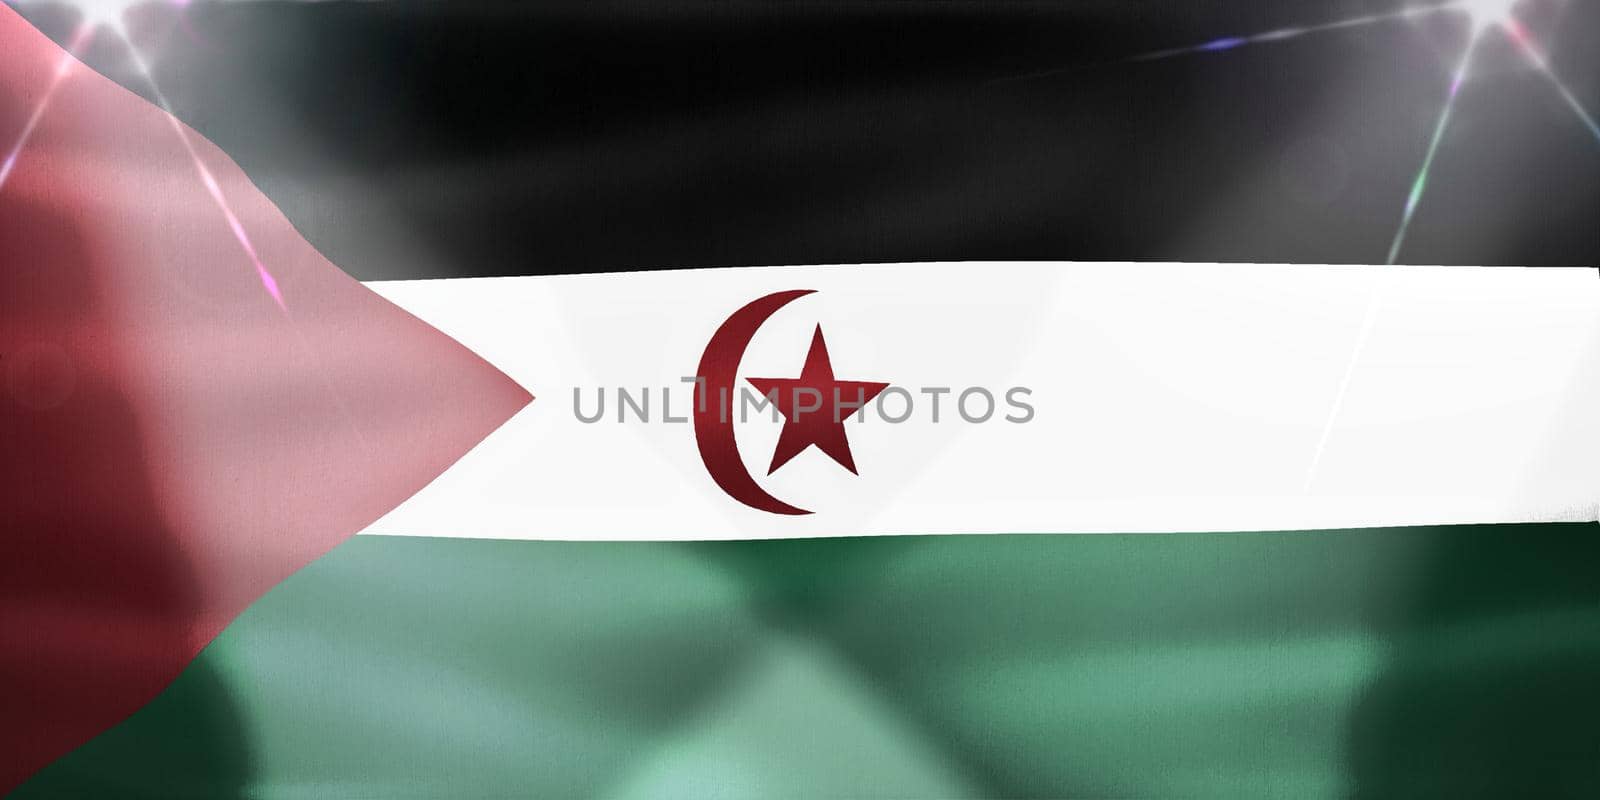 Western Sahara flag - realistic waving fabric flag